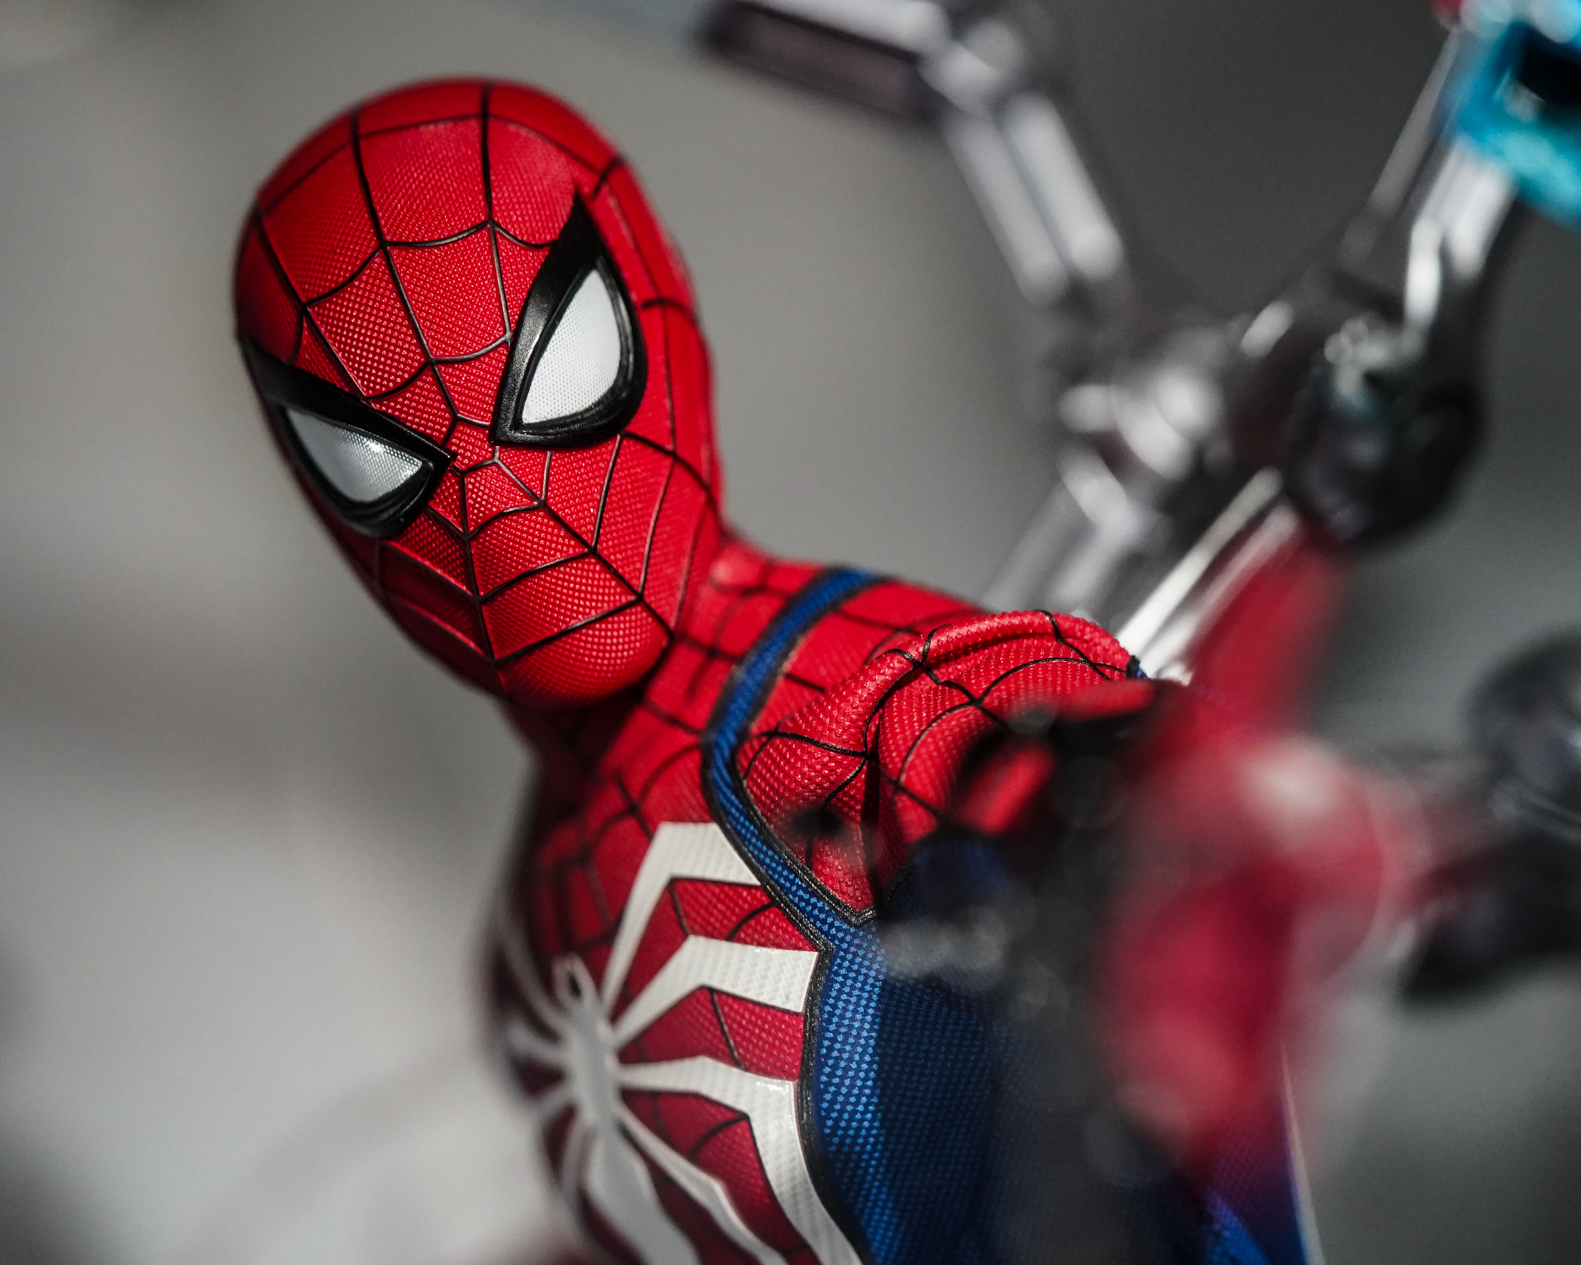 Shop Marvel's Spider-Man collection